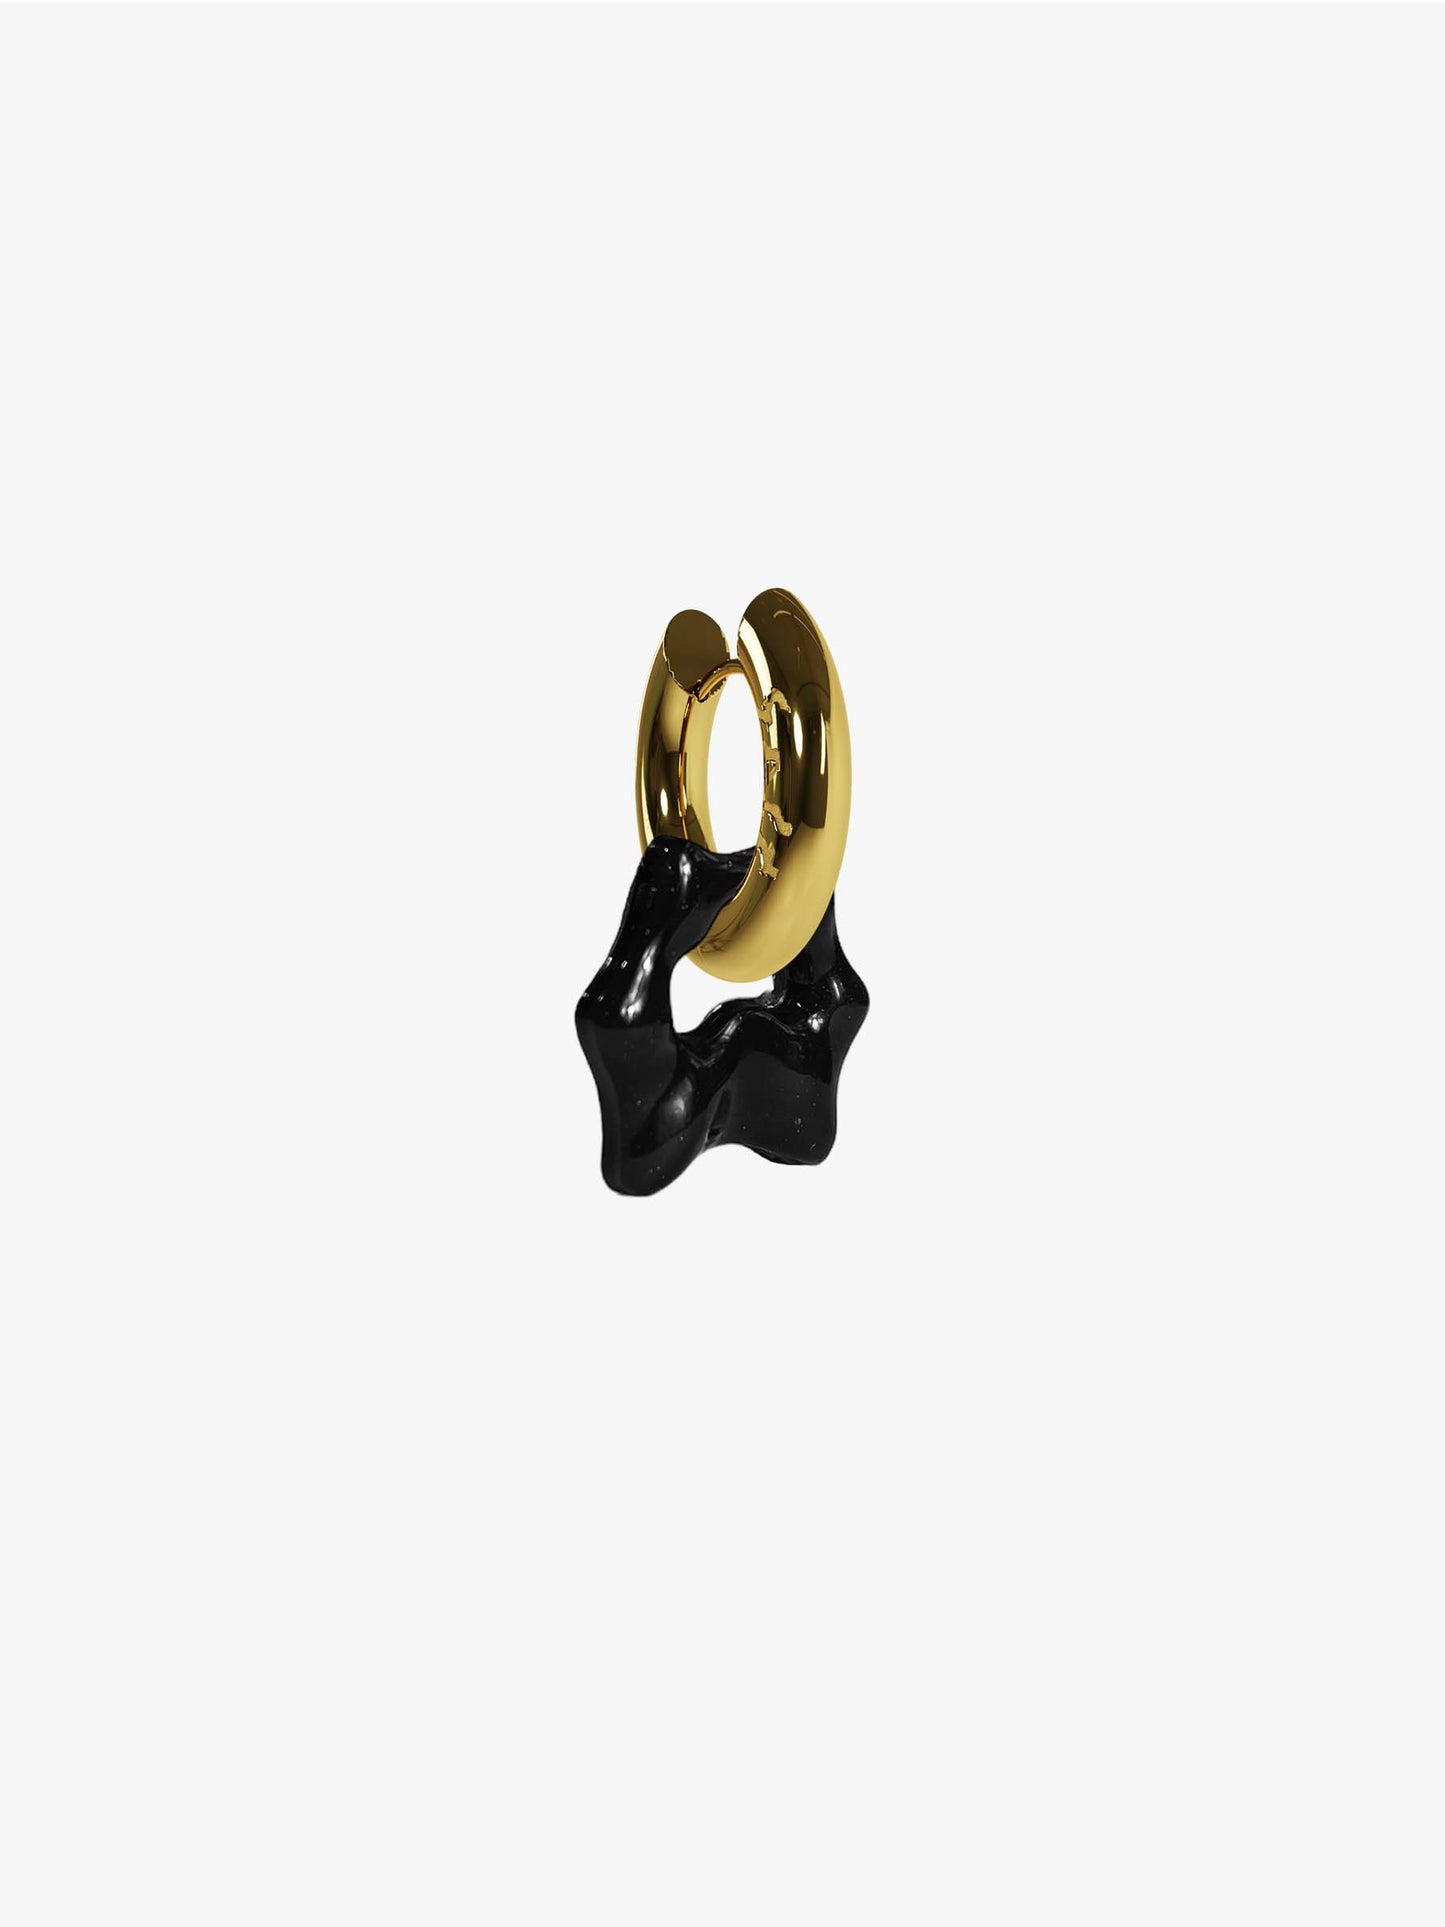 Tab Cuno black gold earring (pair)